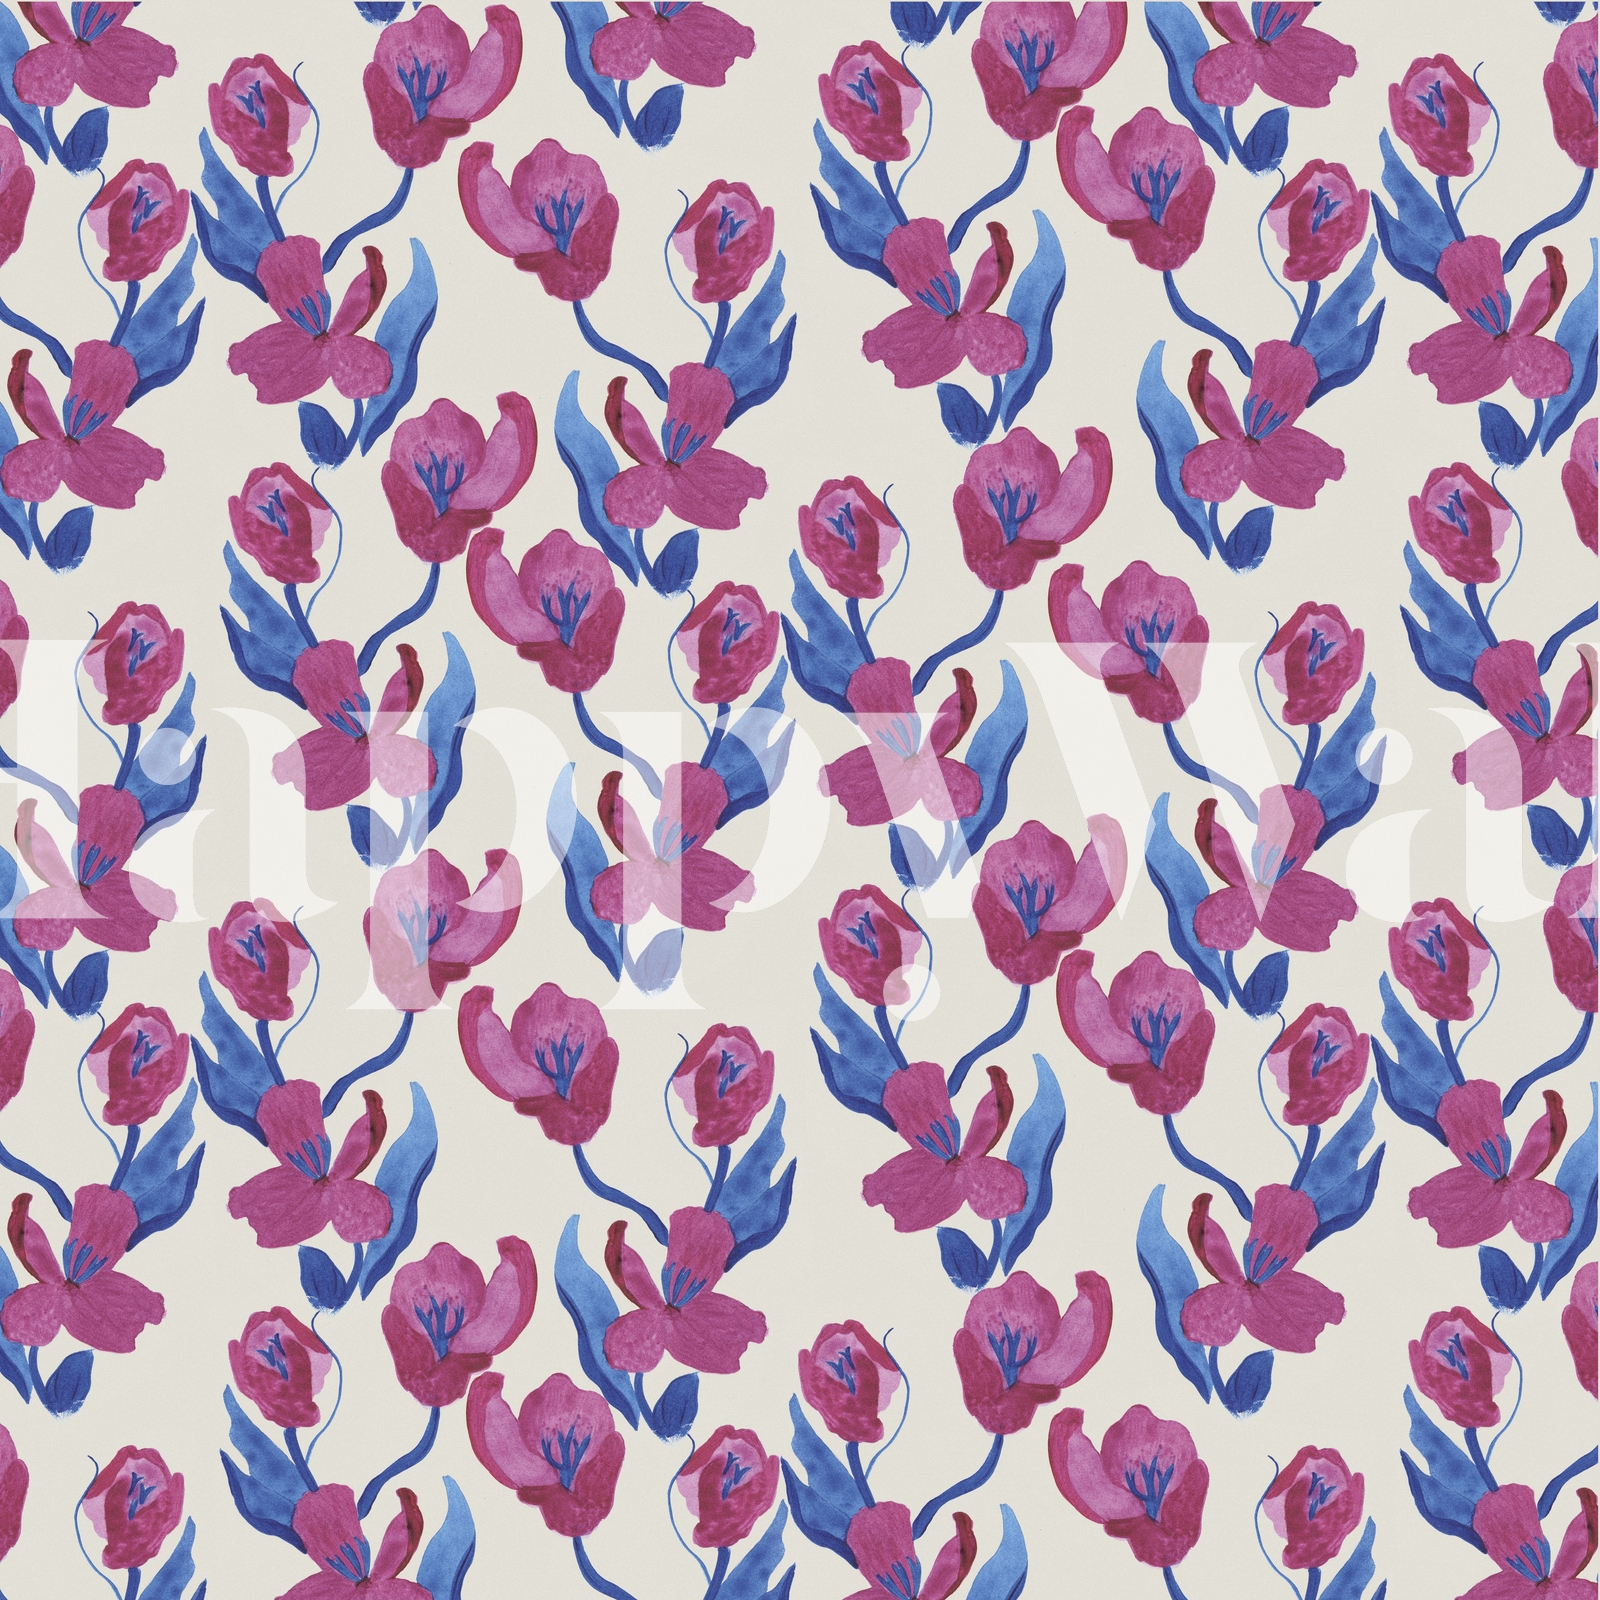 Buy Pink Blue Flower Wallpaper Free Shipping